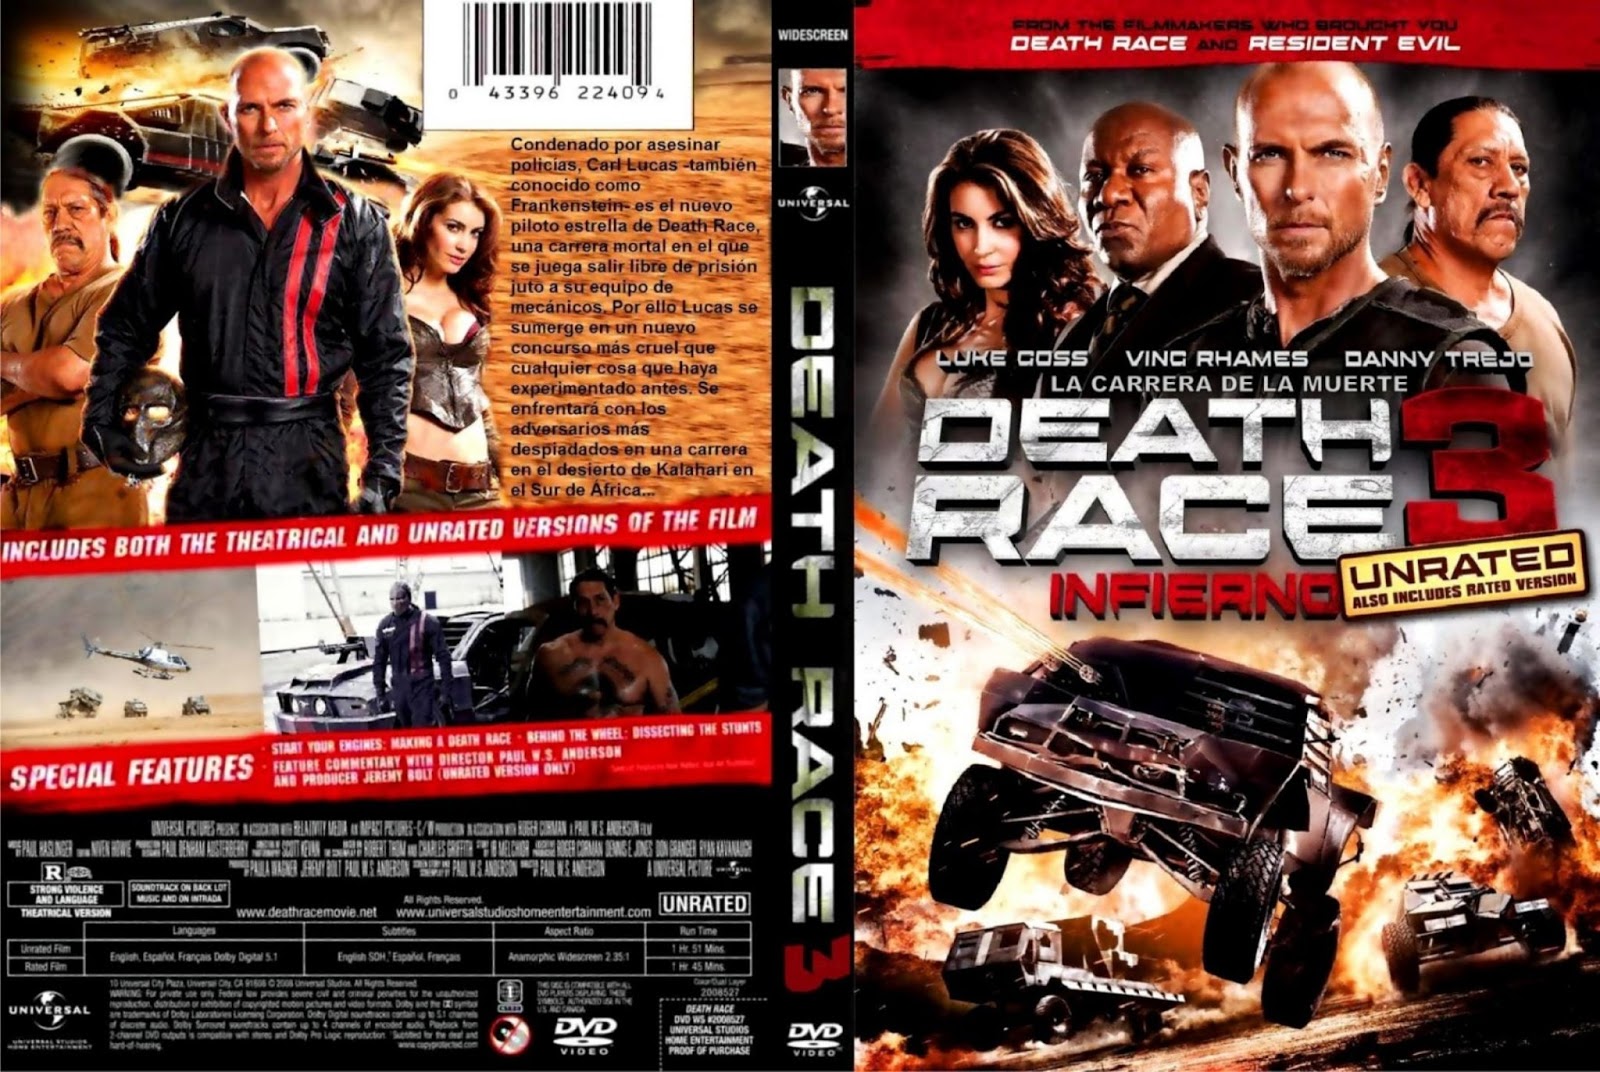 Death Race-3 Inferno [Hindi]